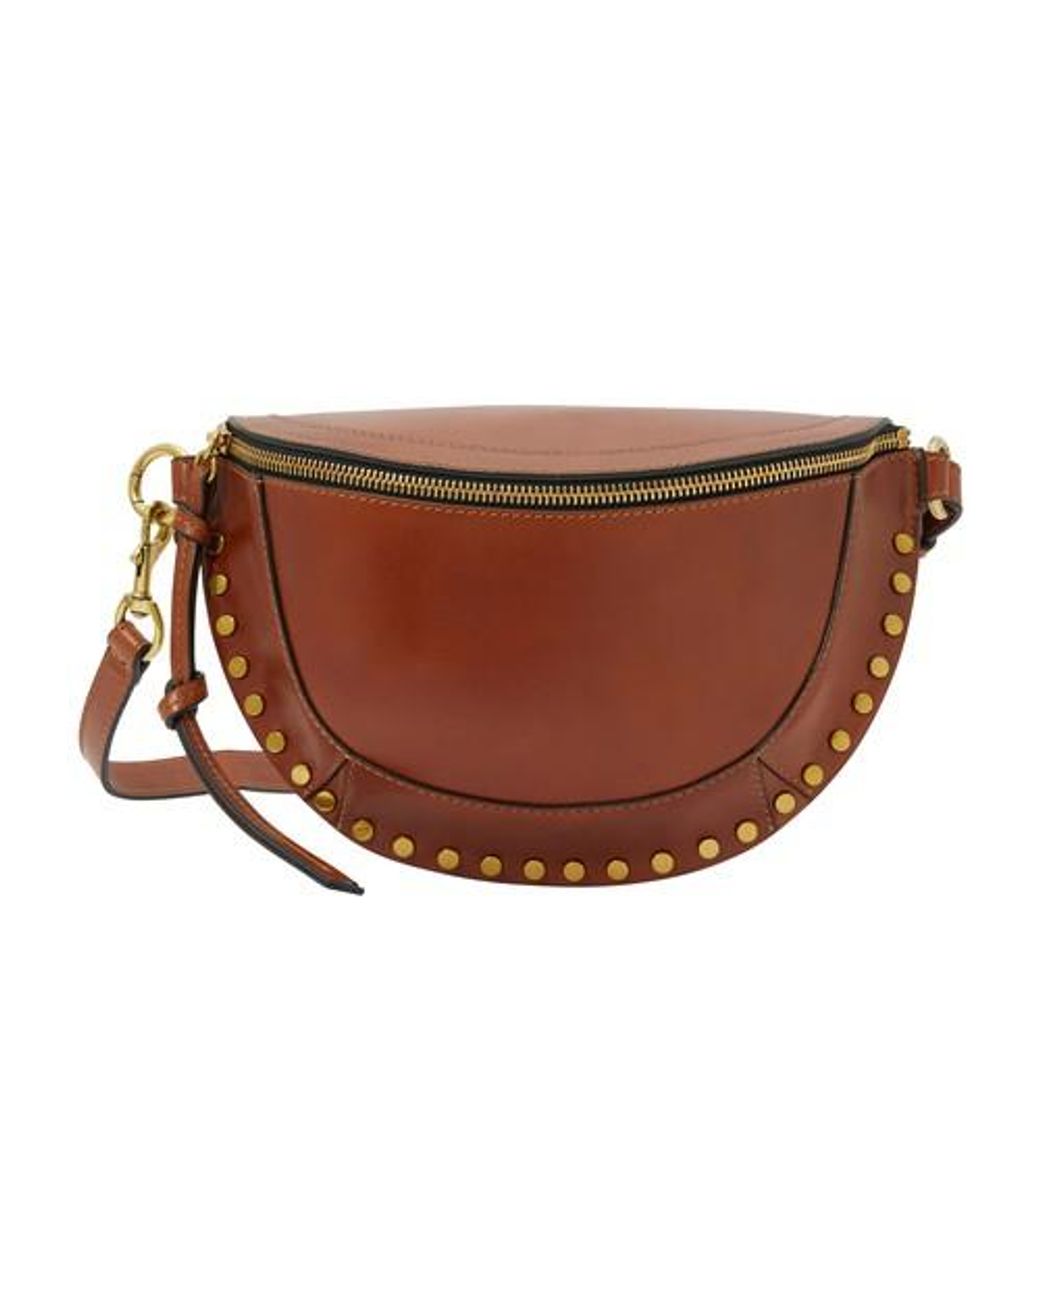 Isabel Marant Skano Belt Bag in Cognac (Brown) - Lyst